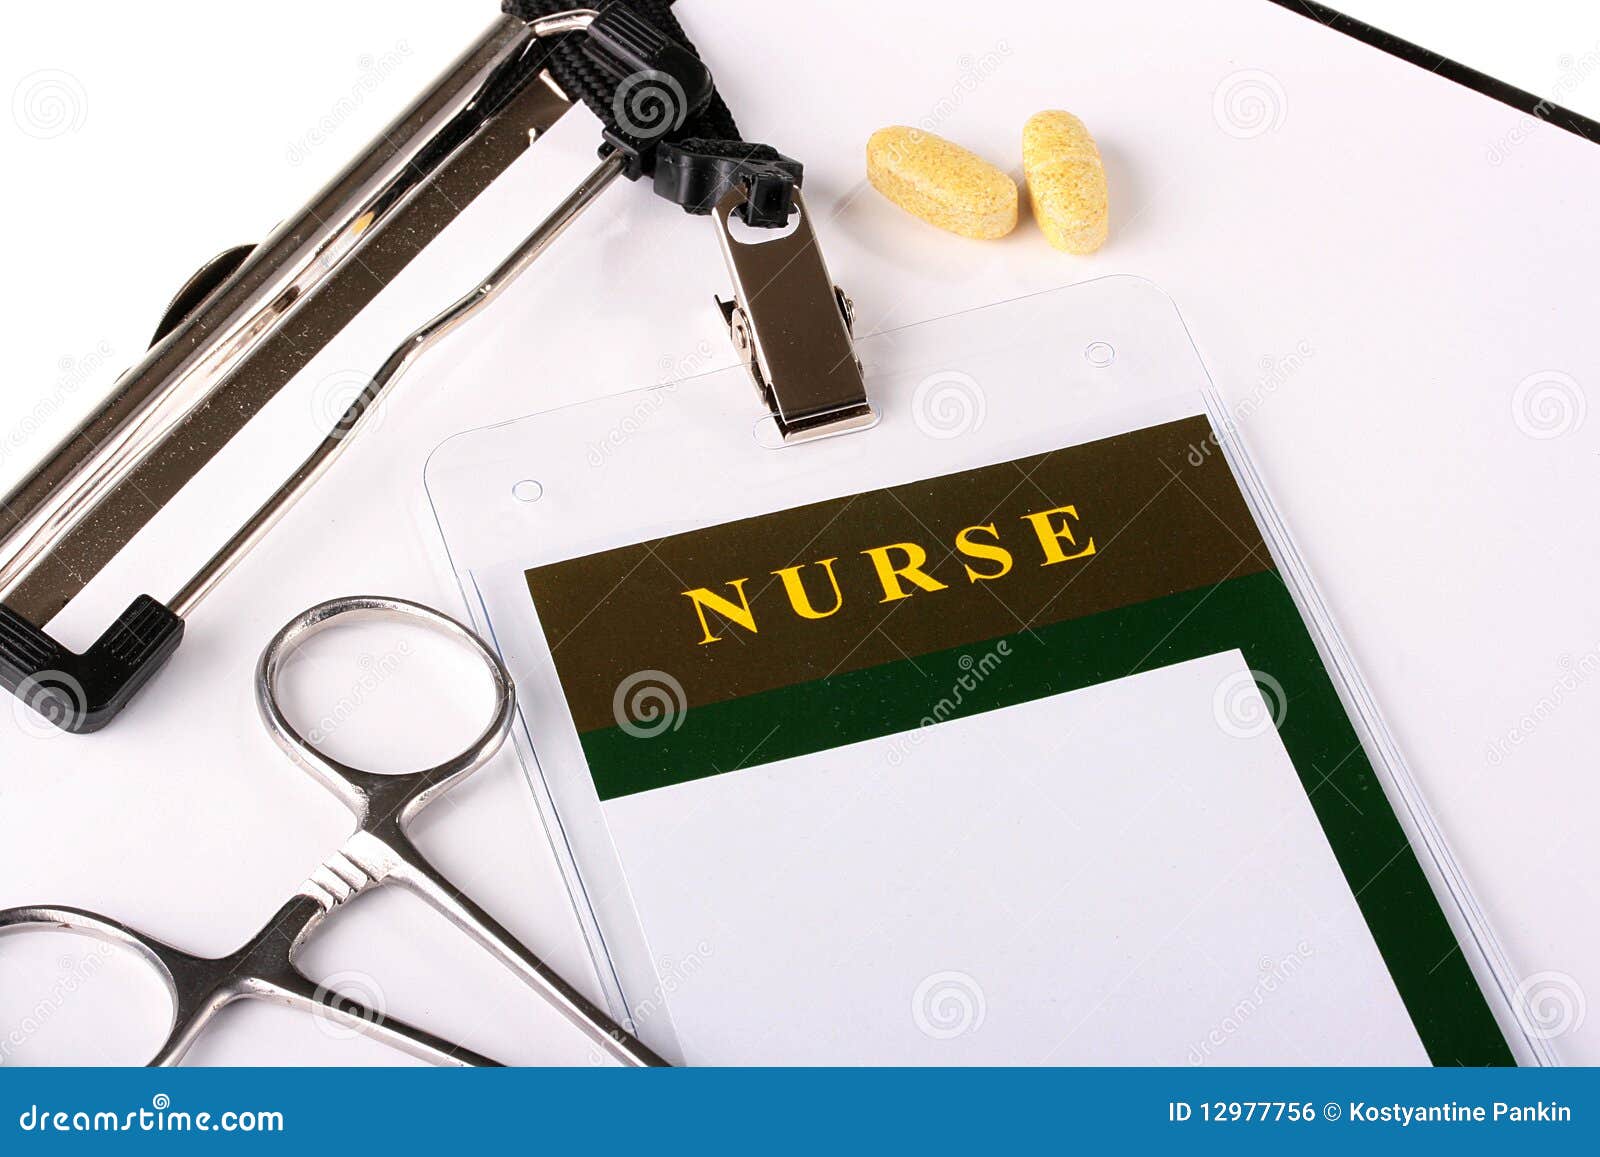 https://thumbs.dreamstime.com/z/id-card-nurse-12977756.jpg